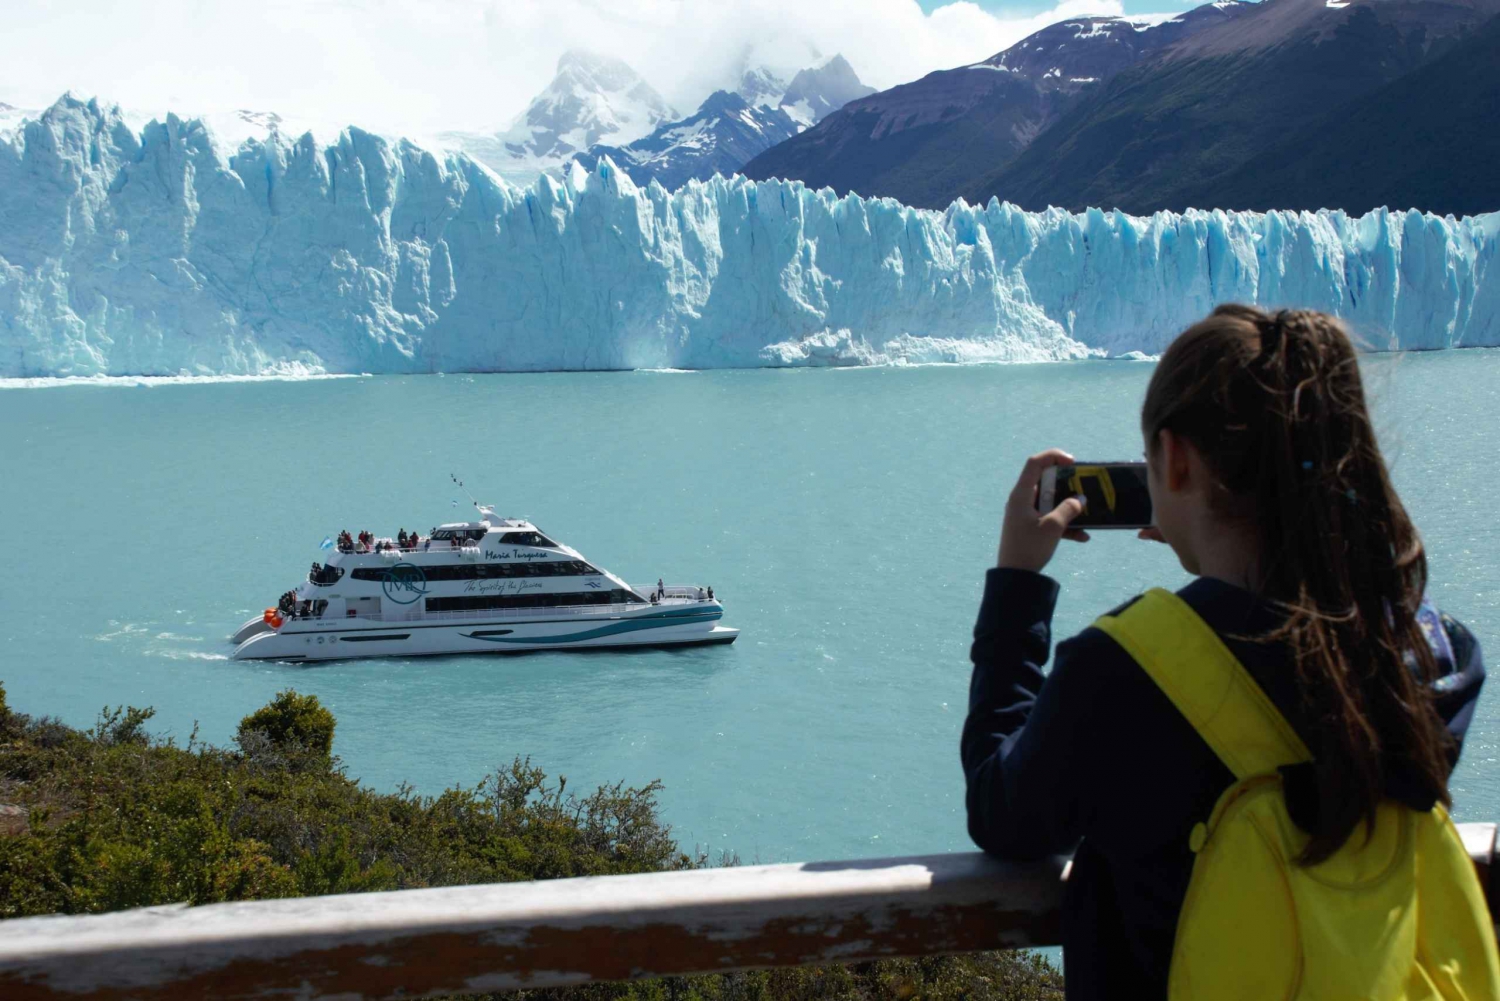 Gourmet Glacier Cruise & Footbridges of Perito Moreno